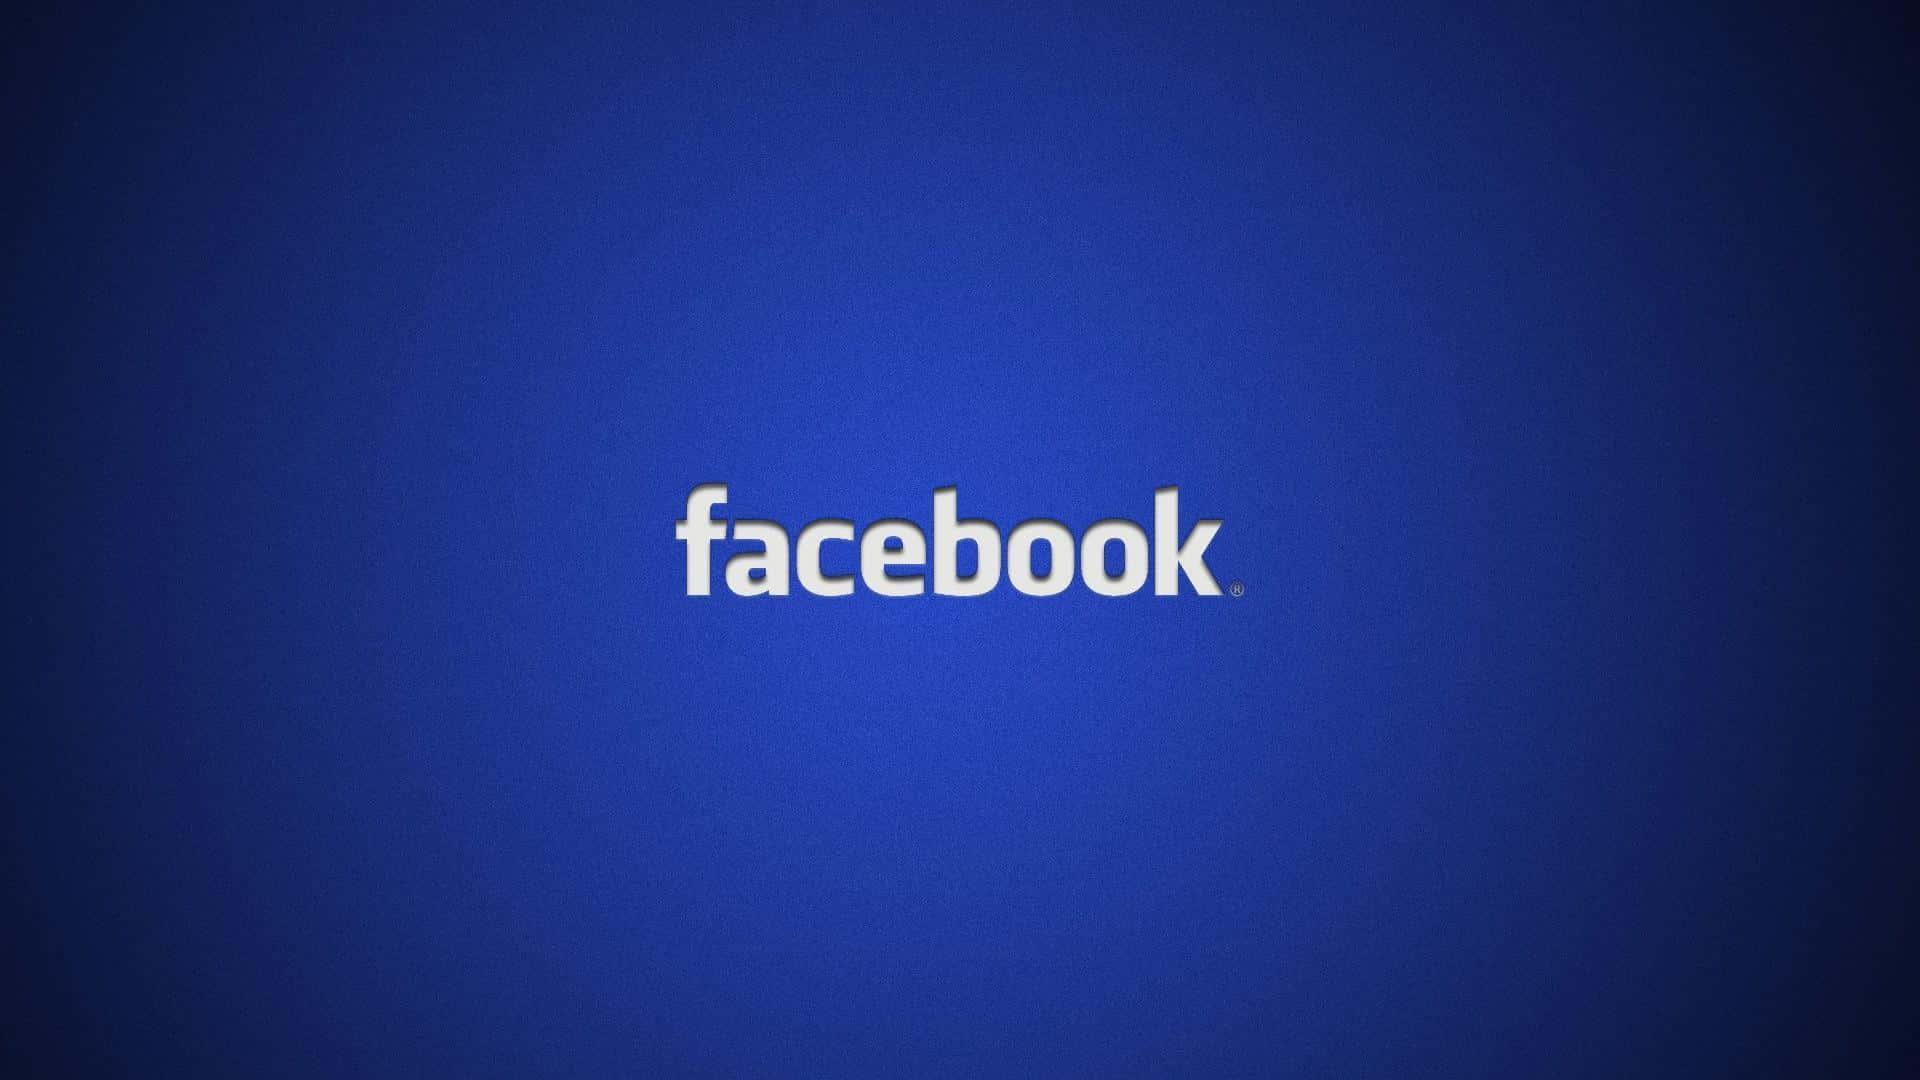 Facebook Logo On A Blue Background